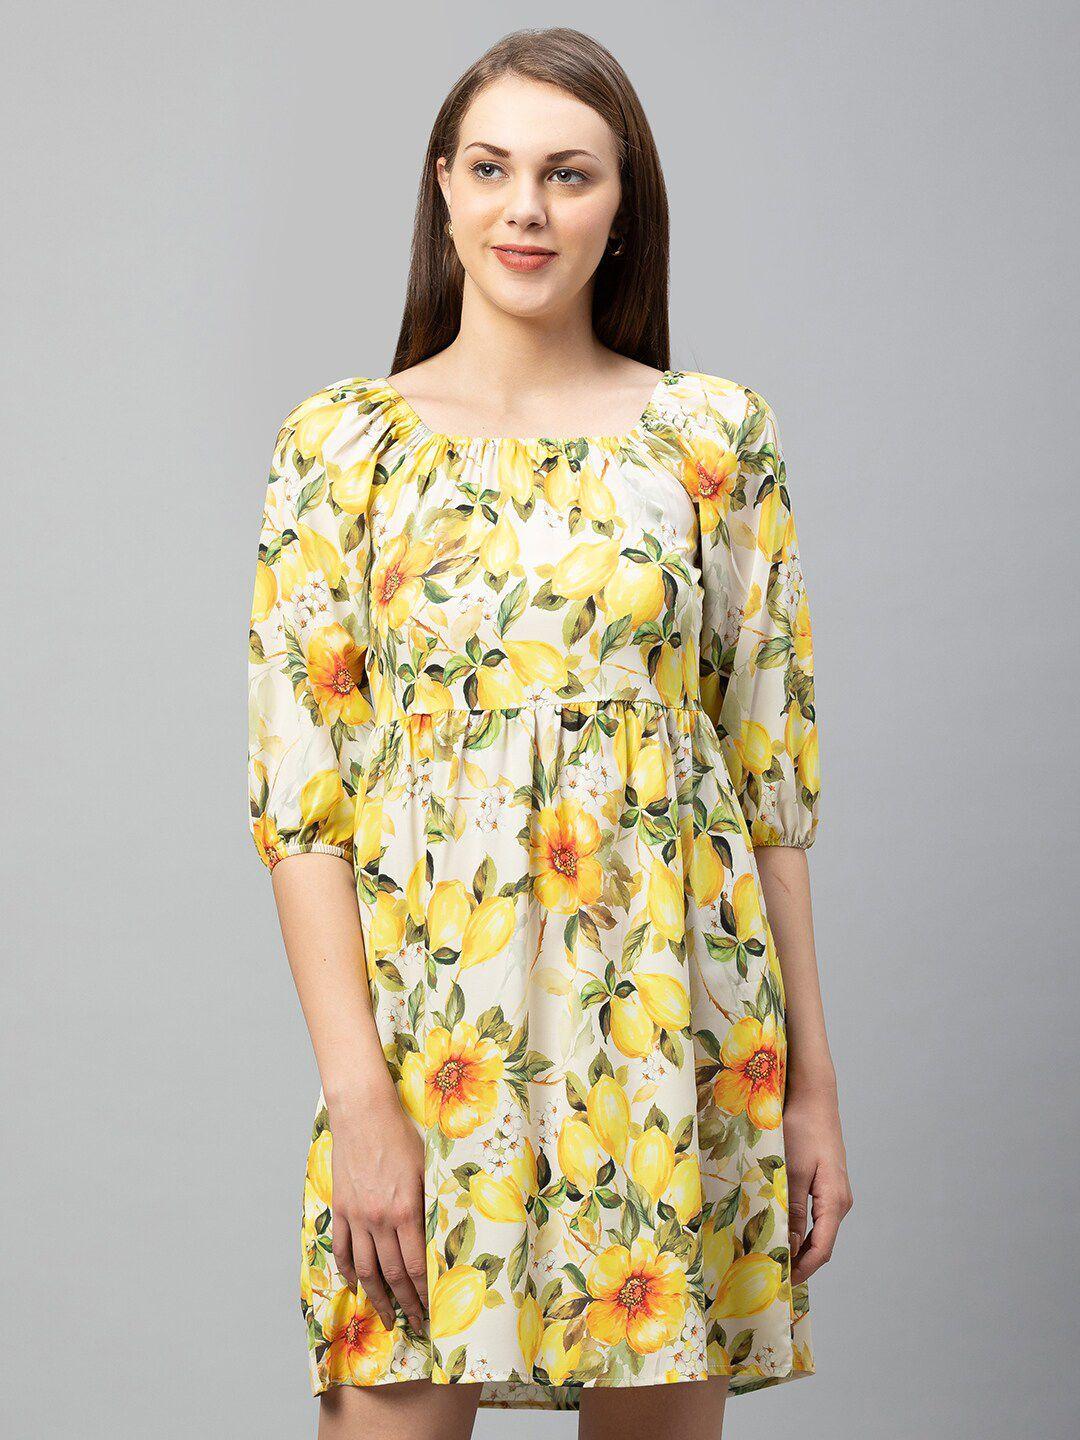 globus yellow floral dress